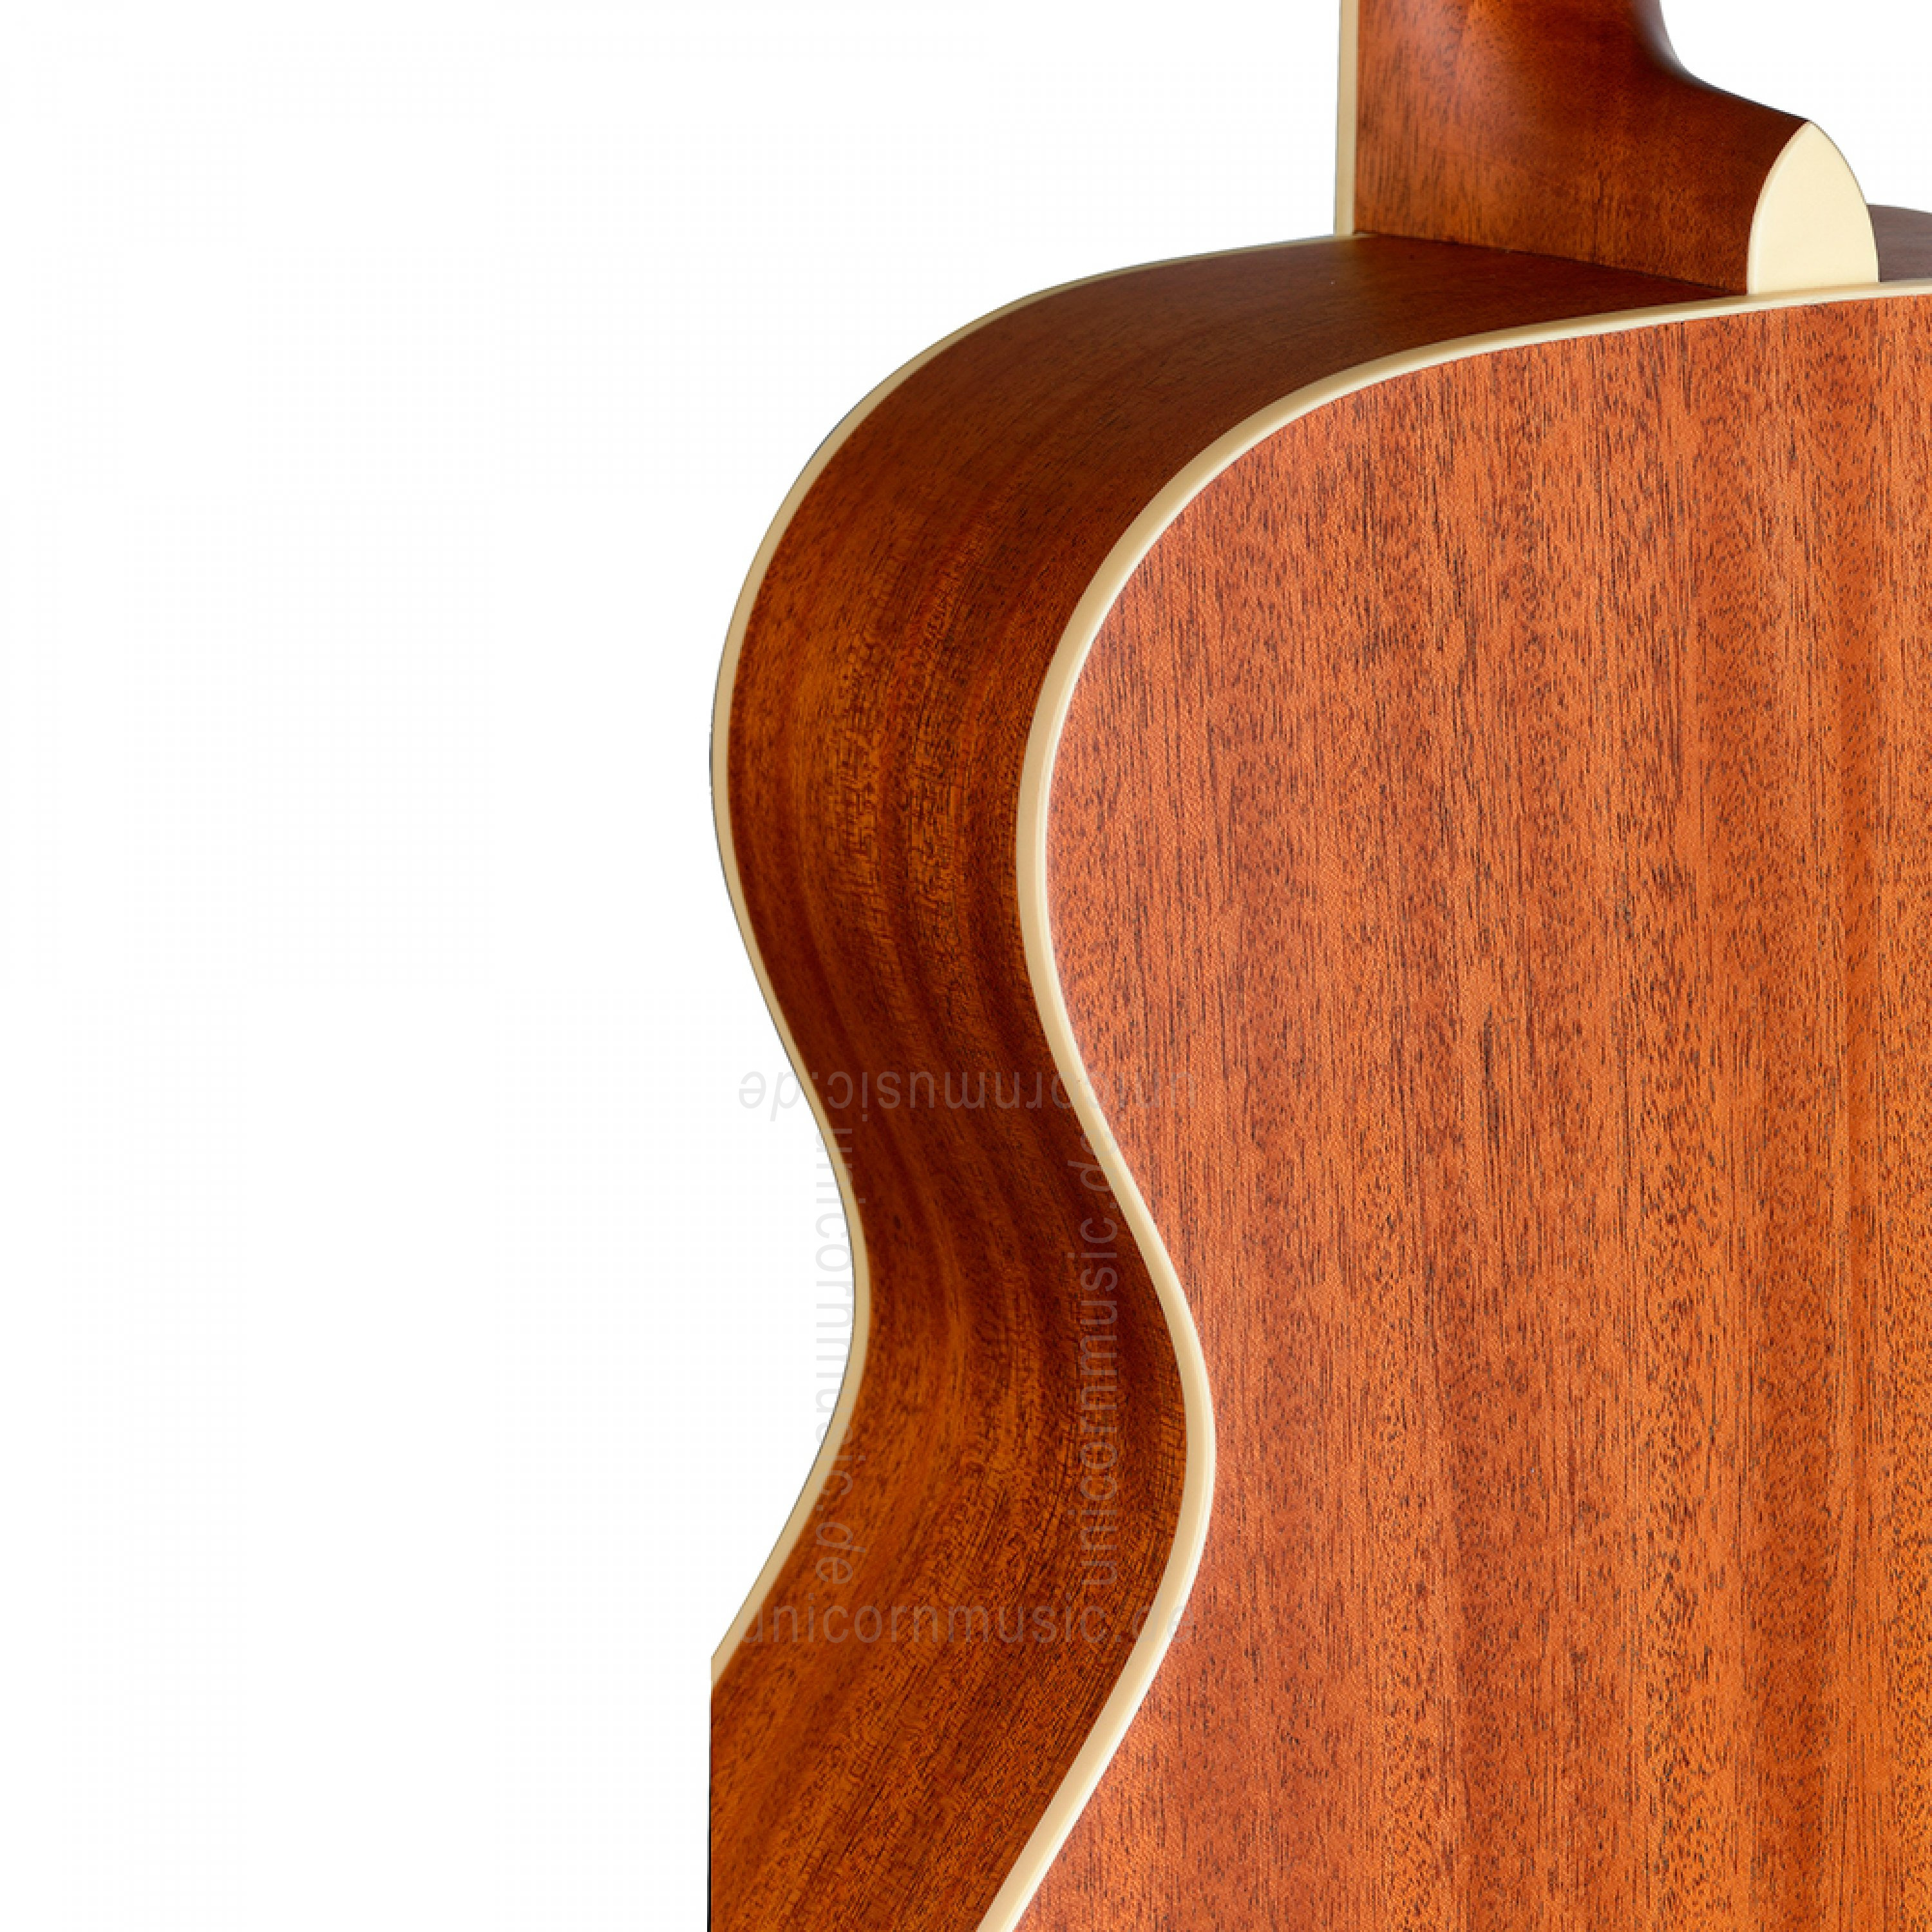 to article description / price Acoustic Guitar JAMES NELIGAN Ezr OM - Orchestra- solid cedar top